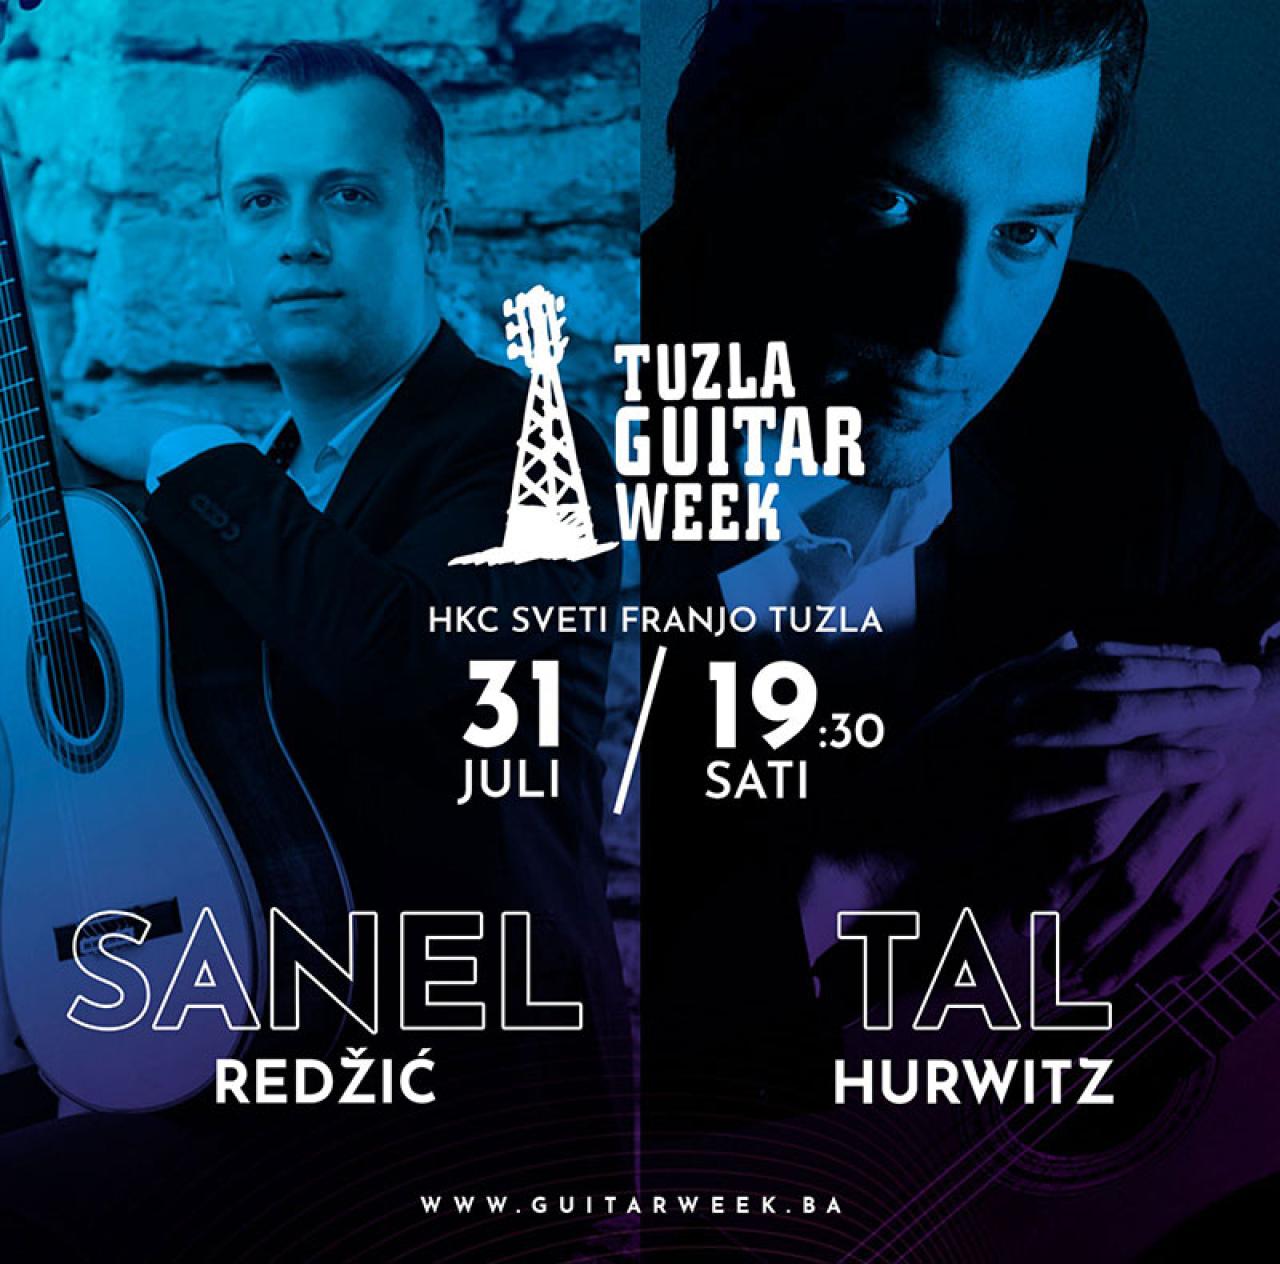 Tuzla Guitar Weeka - Sanel Redžić i Tal Hurwitz koncertom otvaraju Sedmicu gitare u Tuzli